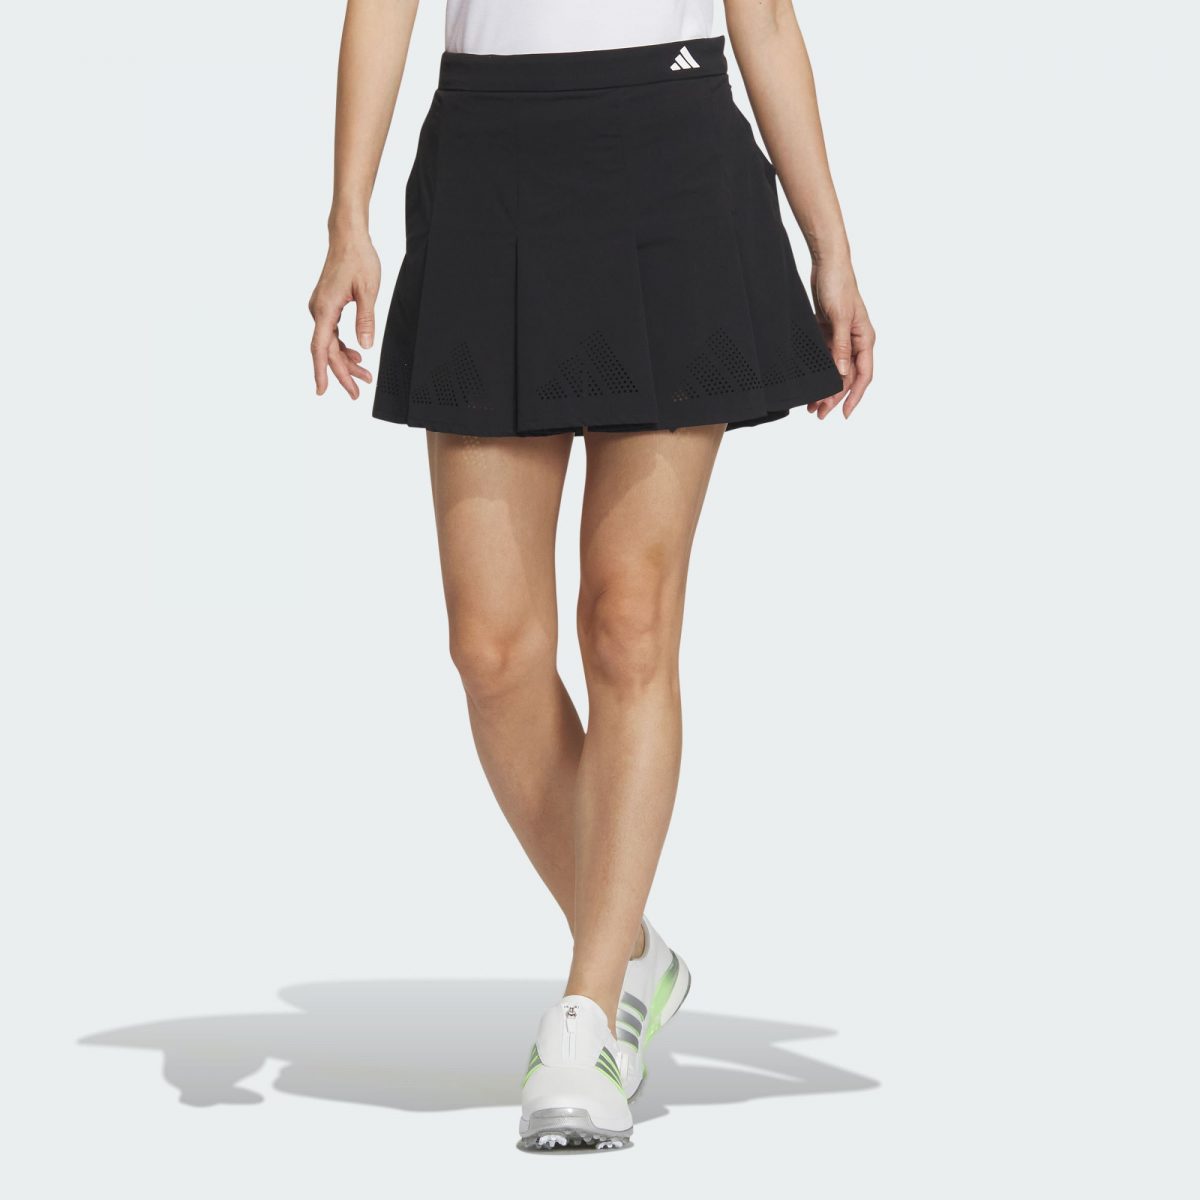 Женская юбка adidas STRETCH FLARED SKIRT черная фото